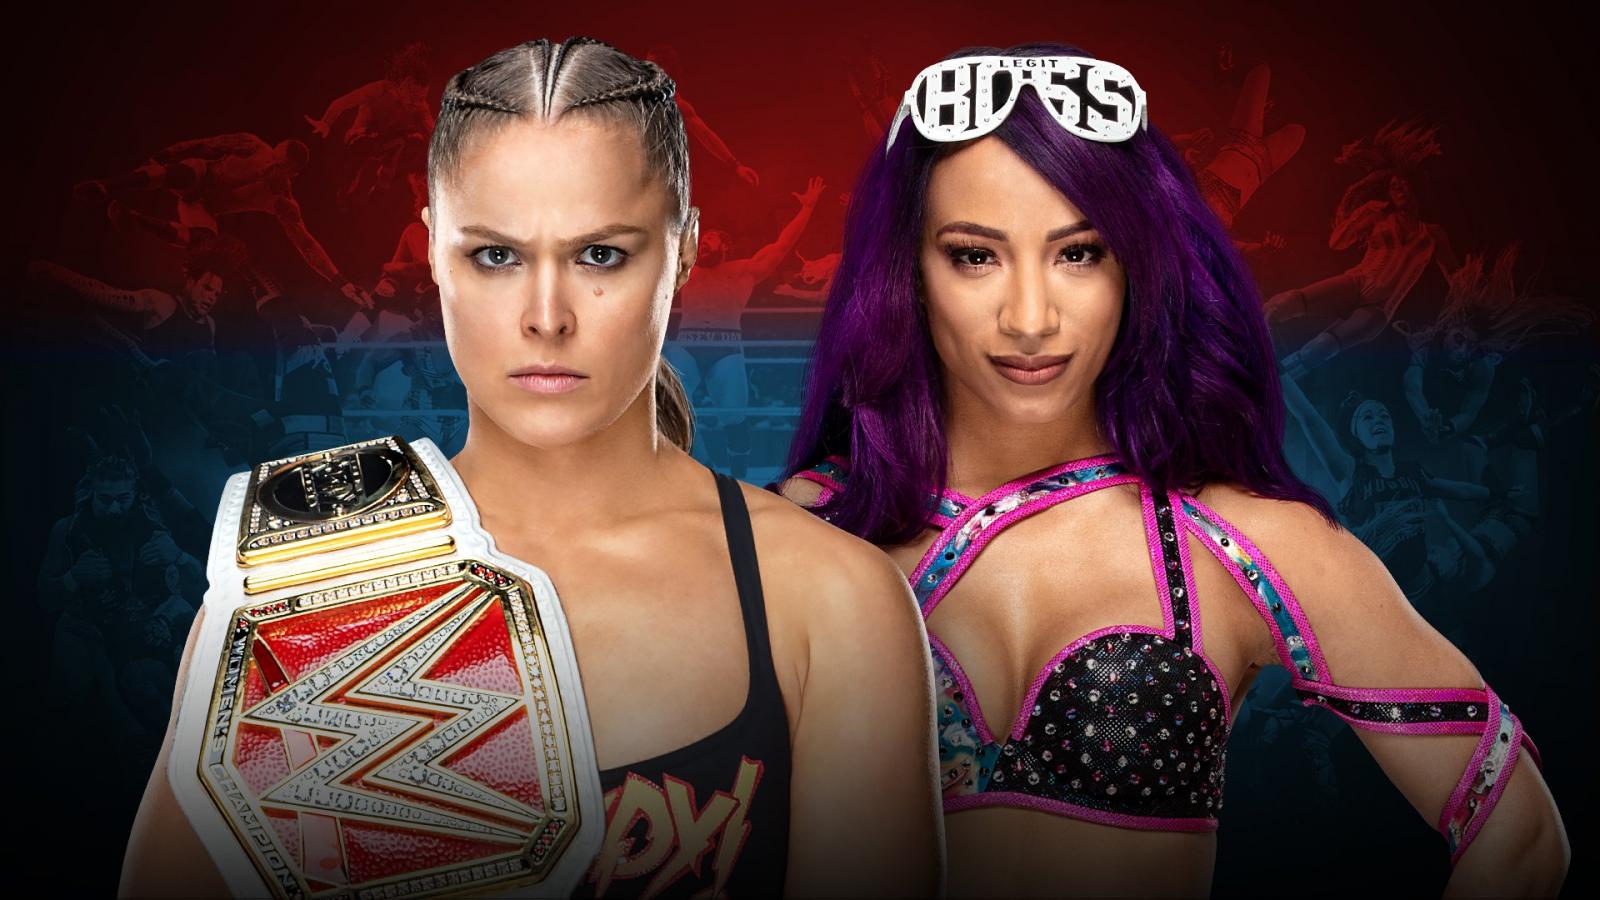 Wwe Royal Rumble 2019 Ronda Rousey Vs Sasha Banks , HD Wallpaper & Backgrounds